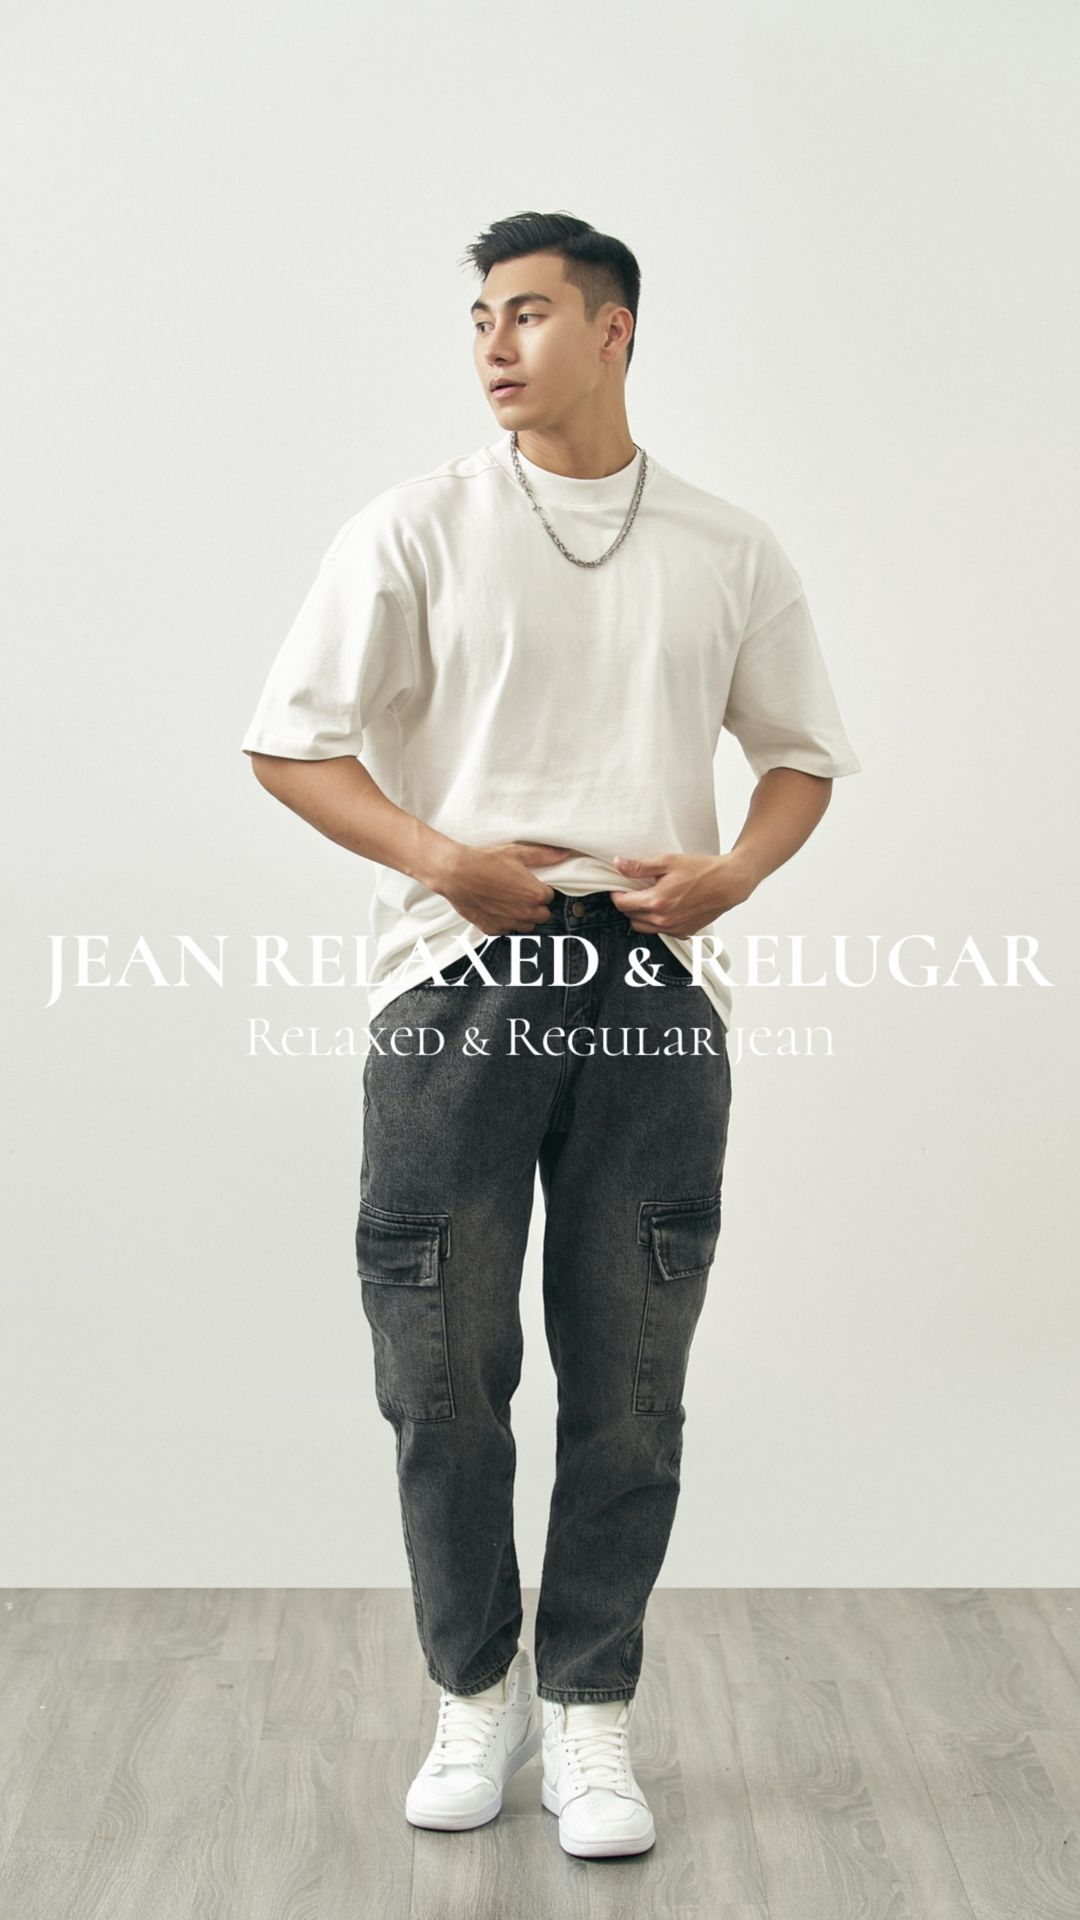 Regular & Relaxed Jean